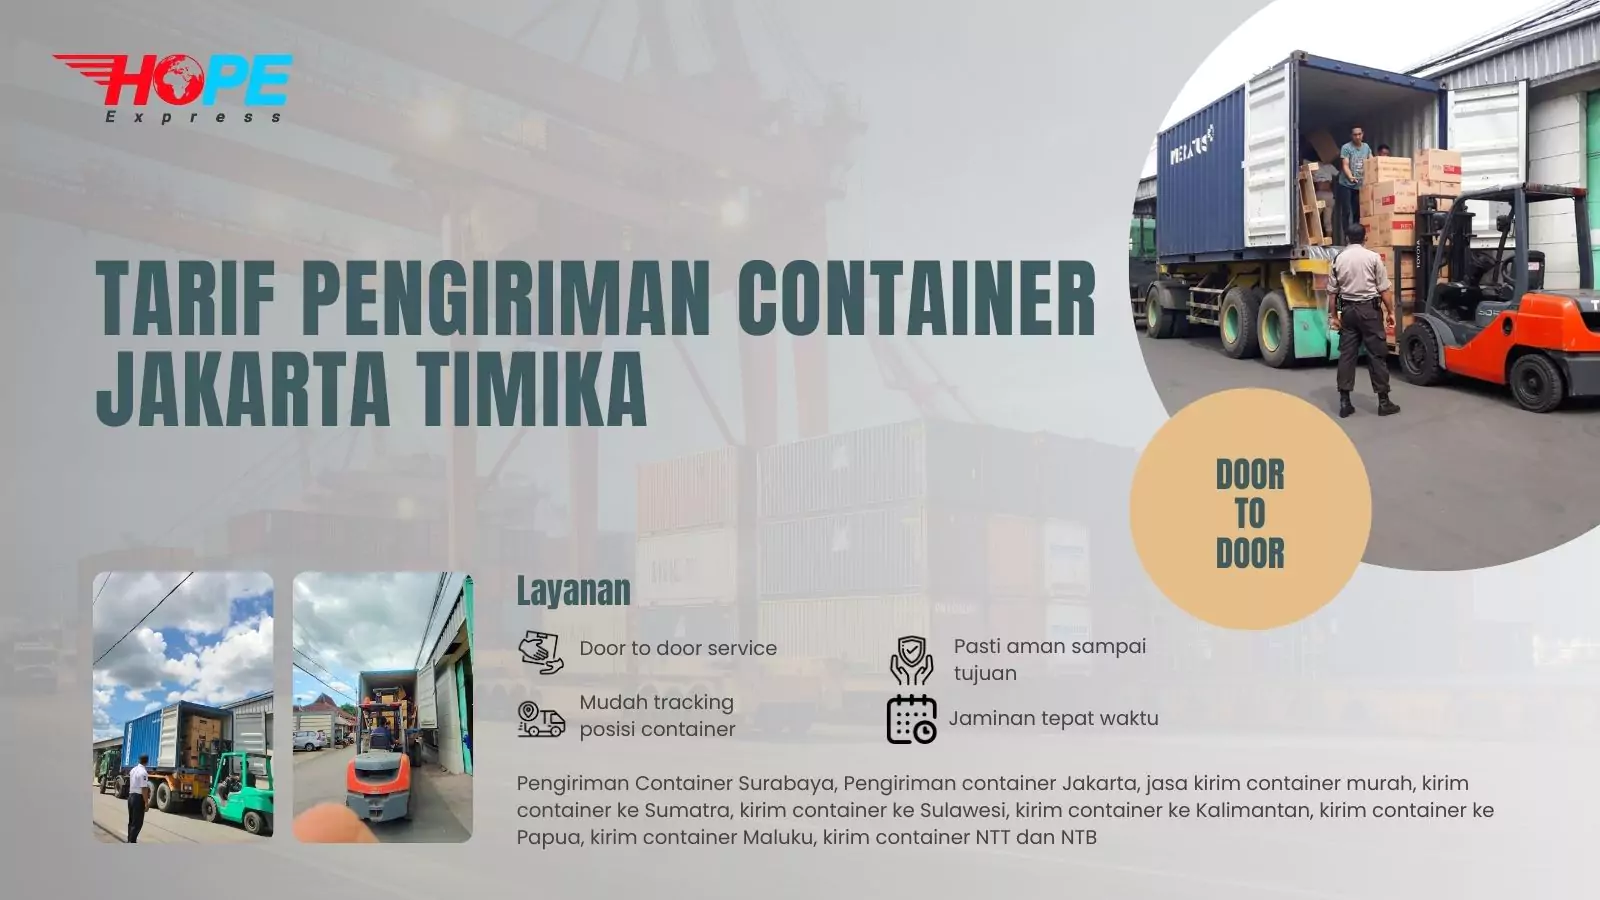 Tarif Pengiriman Container Jakarta Timika